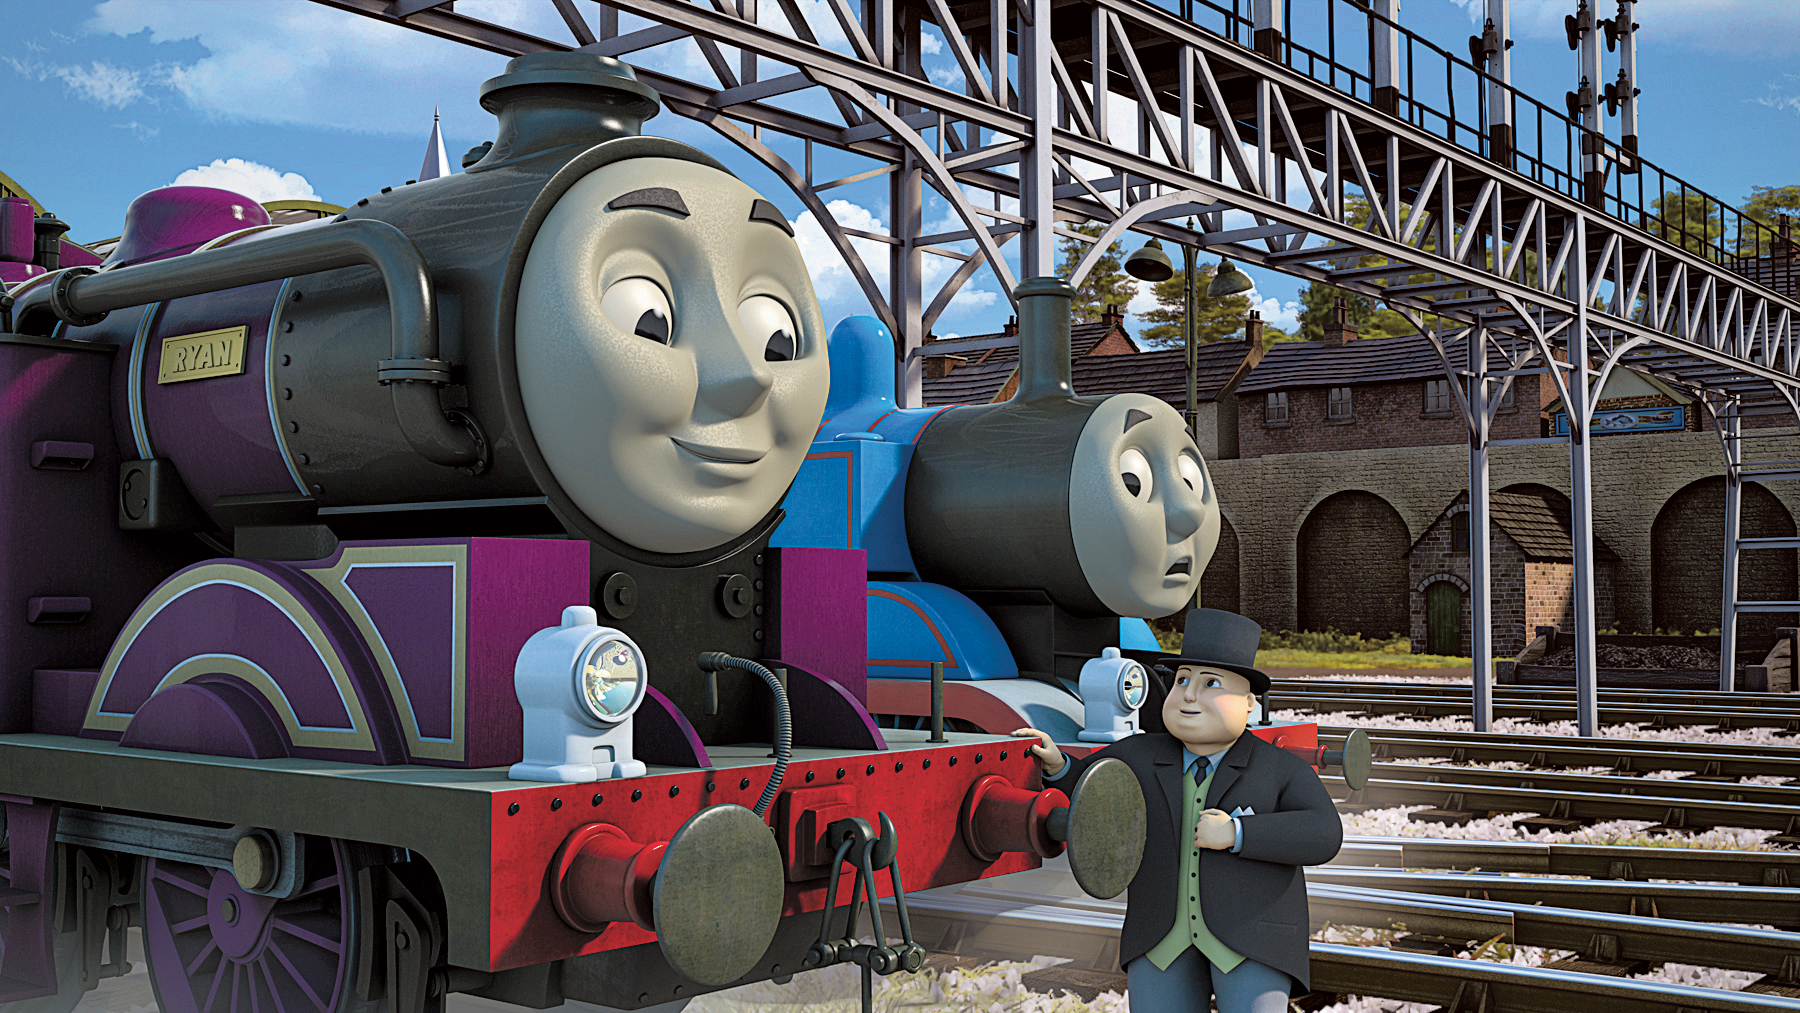 Thomas friends